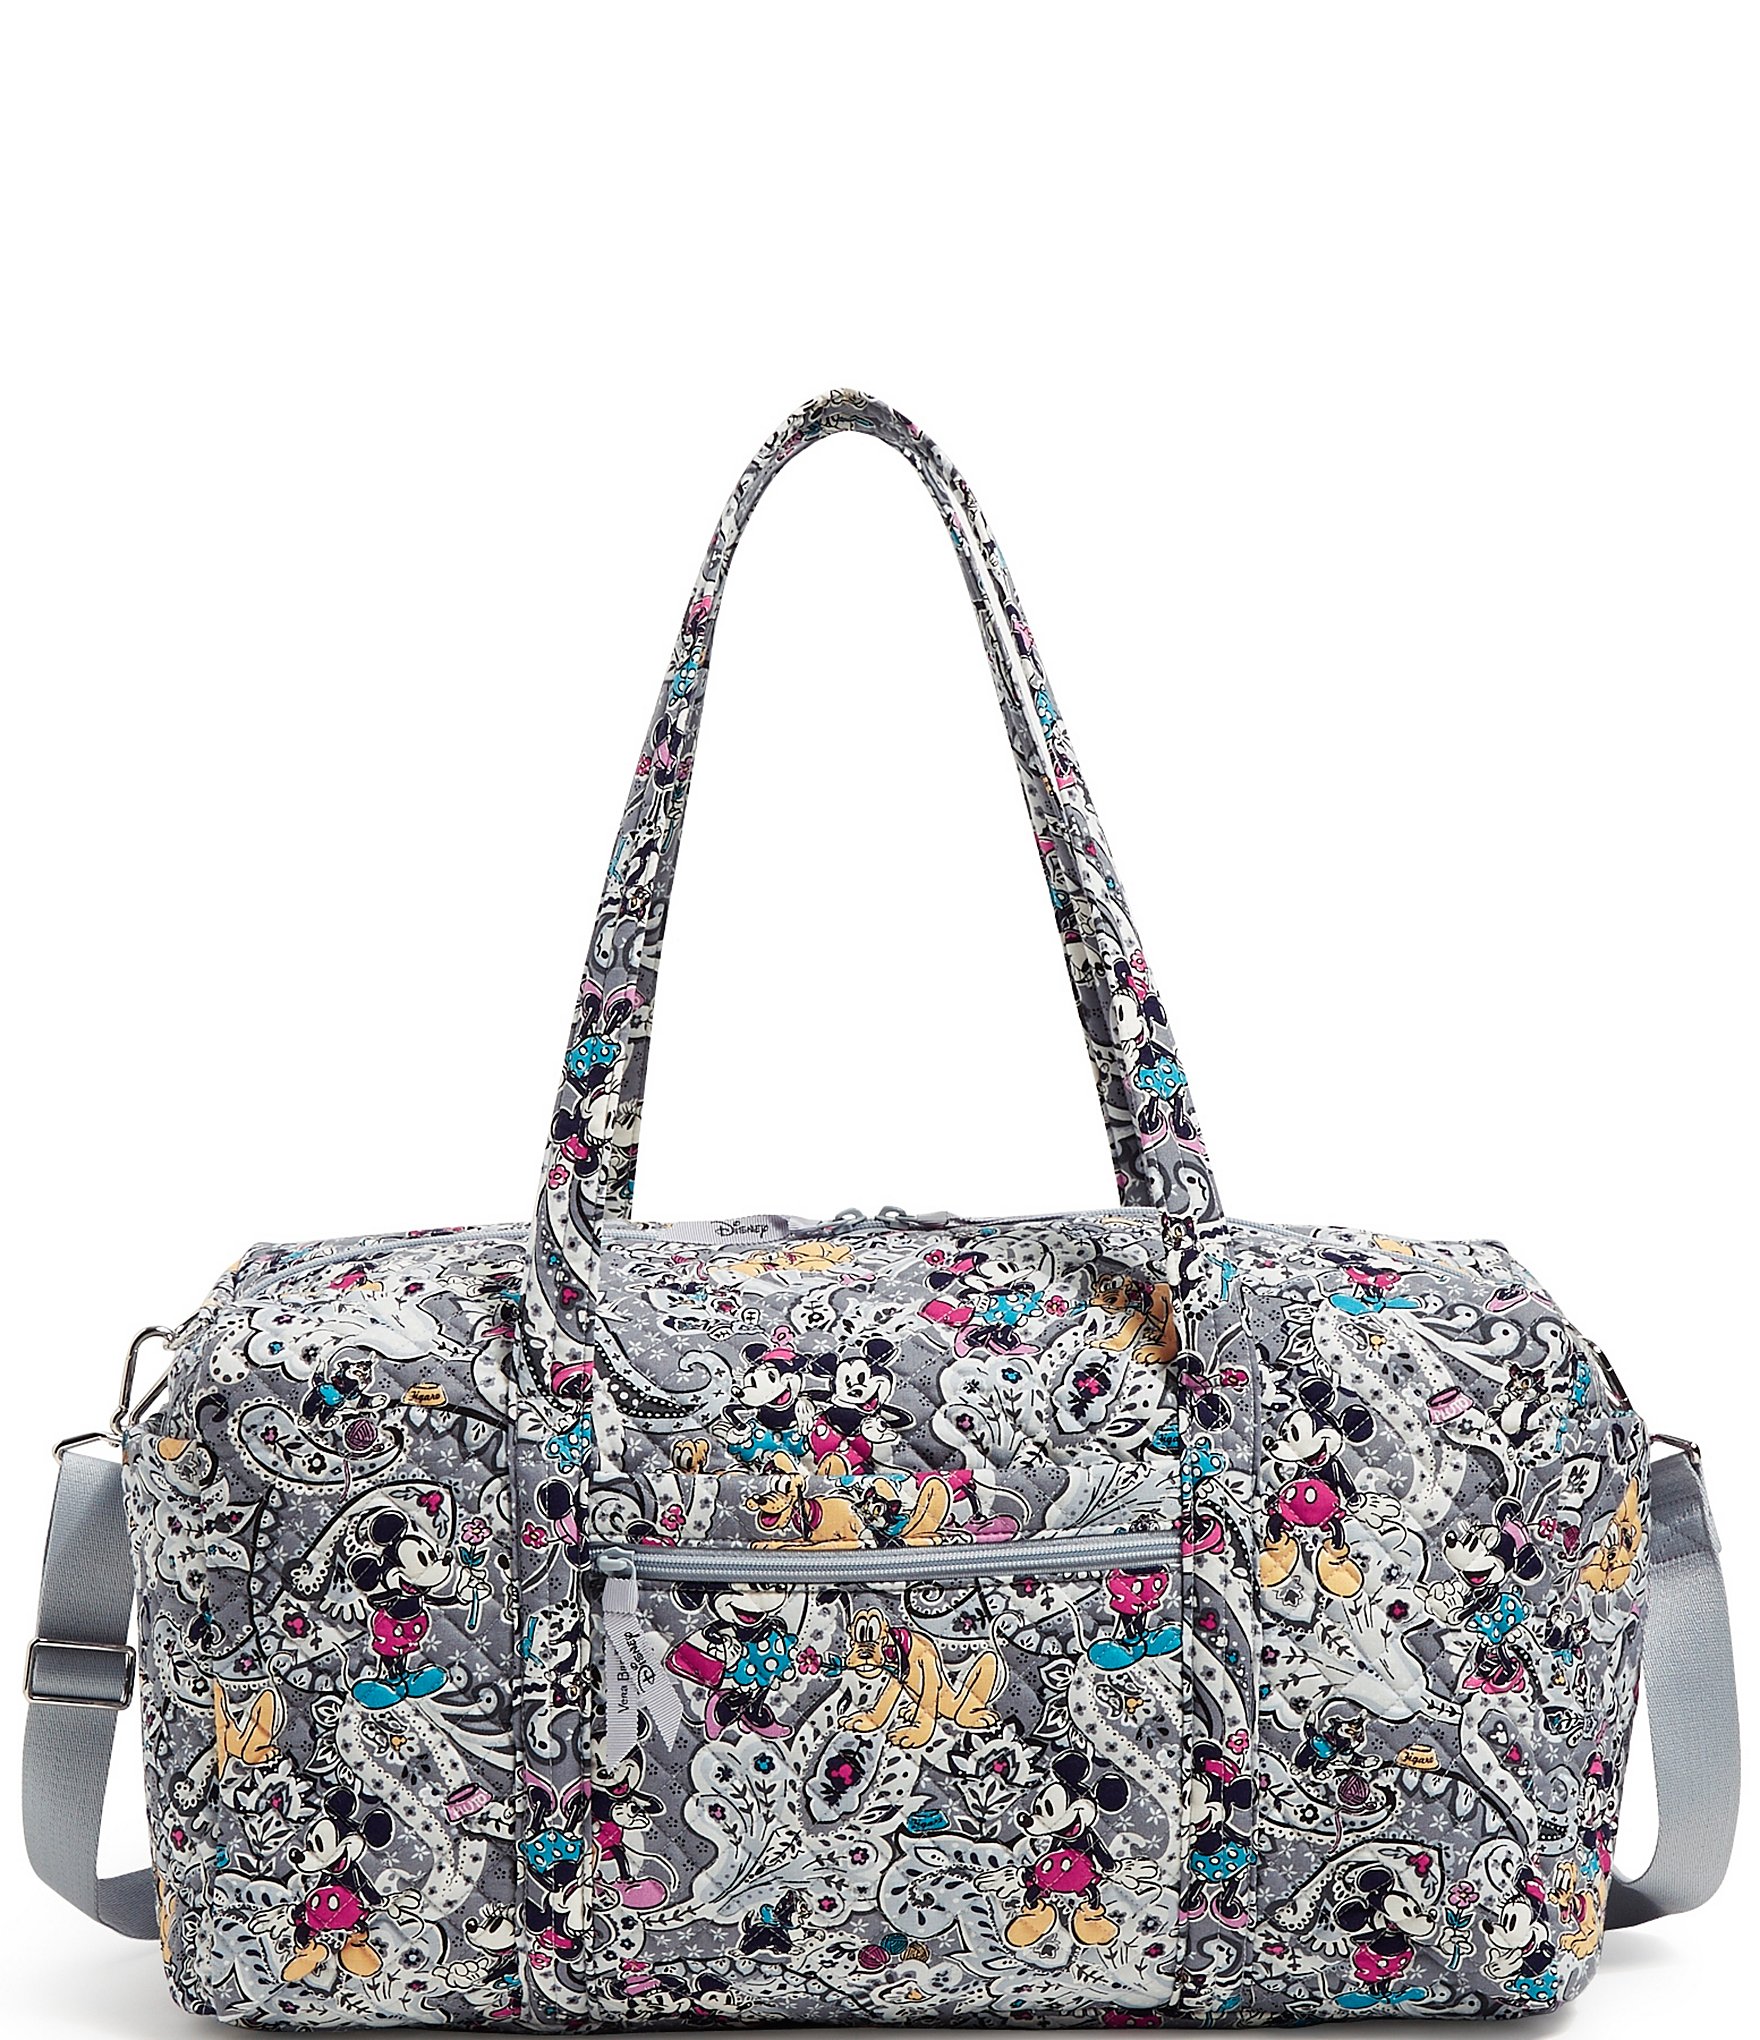 Vera Bradley Women's Cotton Large Travel Duffle Bag